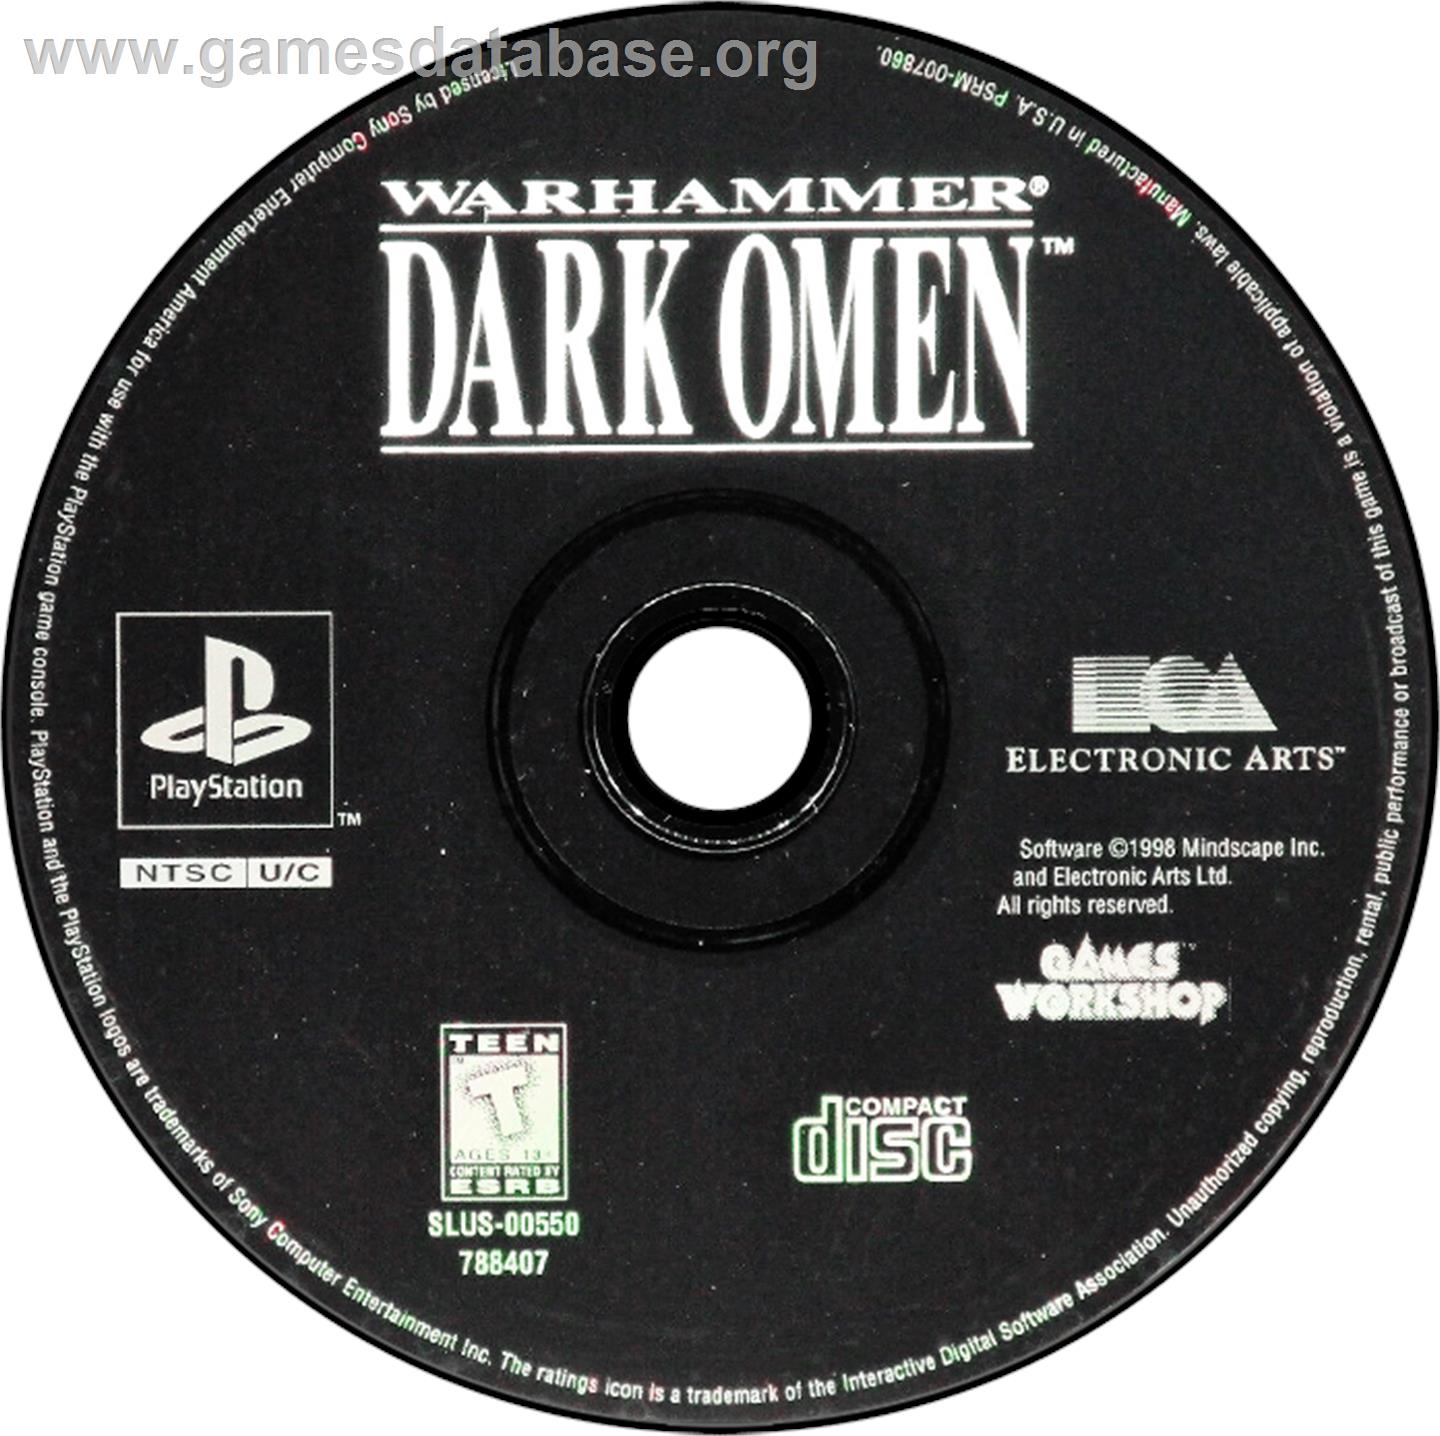 Warhammer: Dark Omen - Sony Playstation - Artwork - Disc